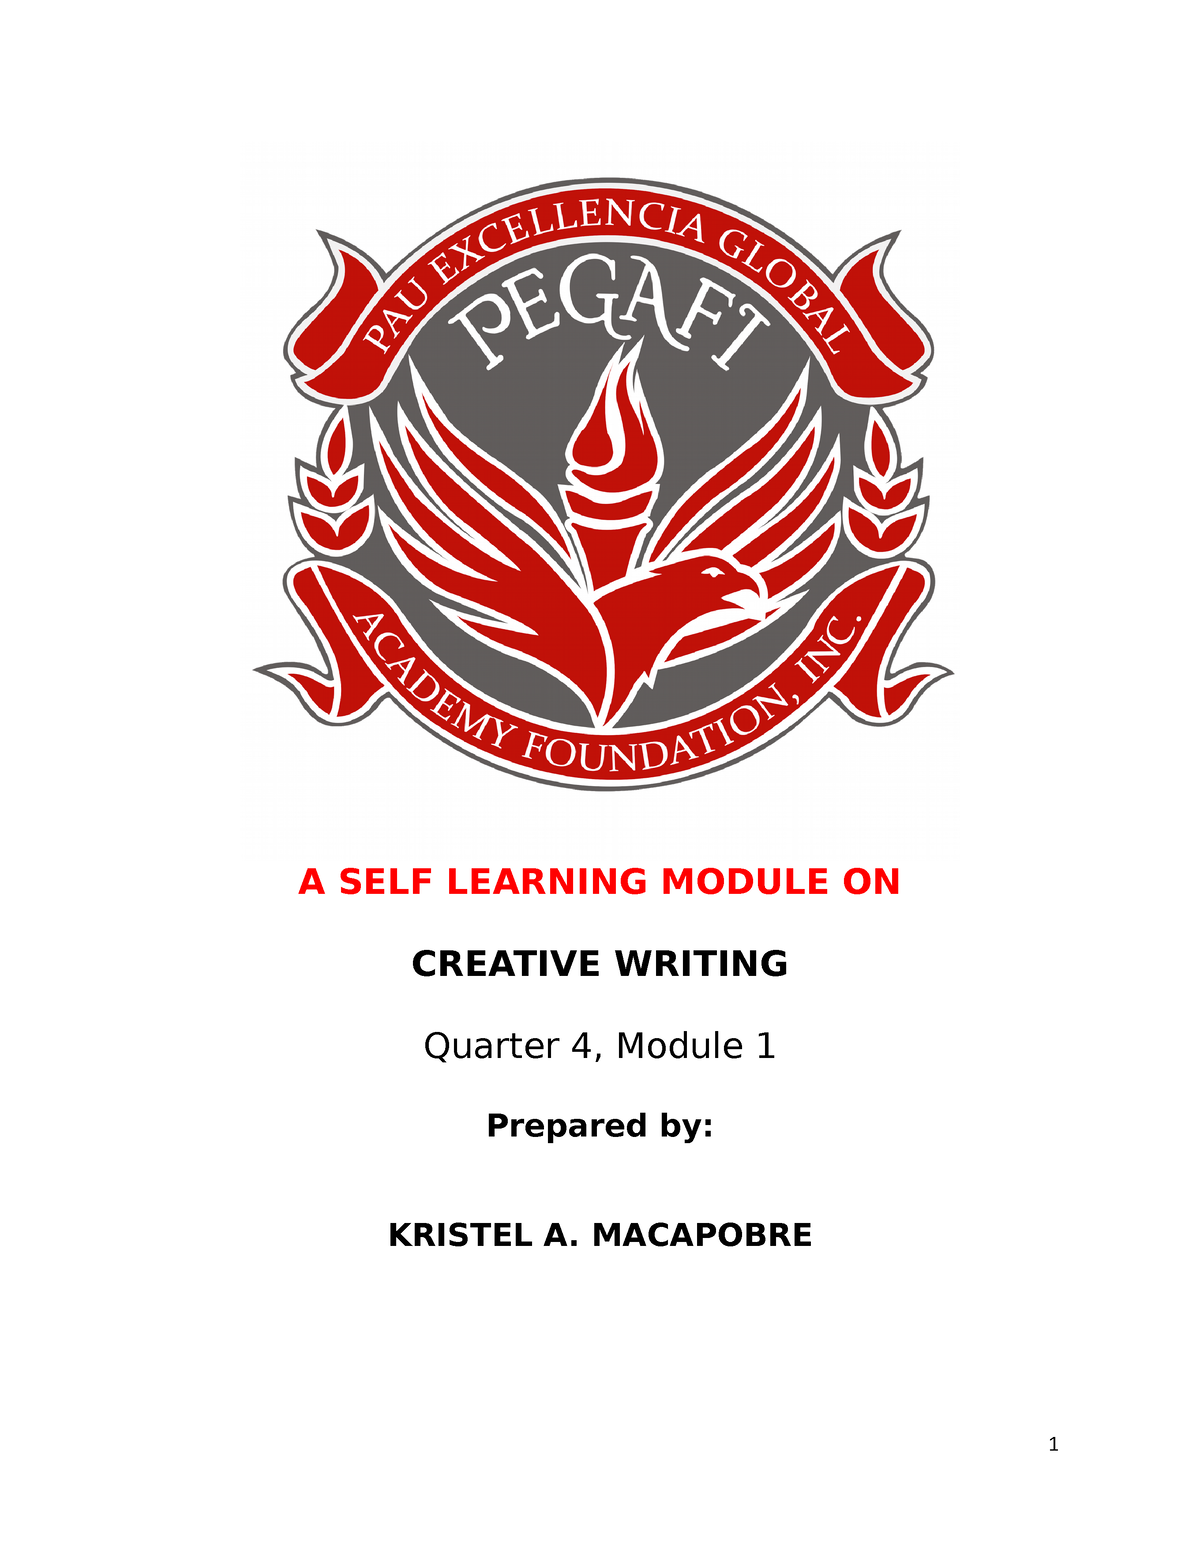 creative writing quarter 4 module 2